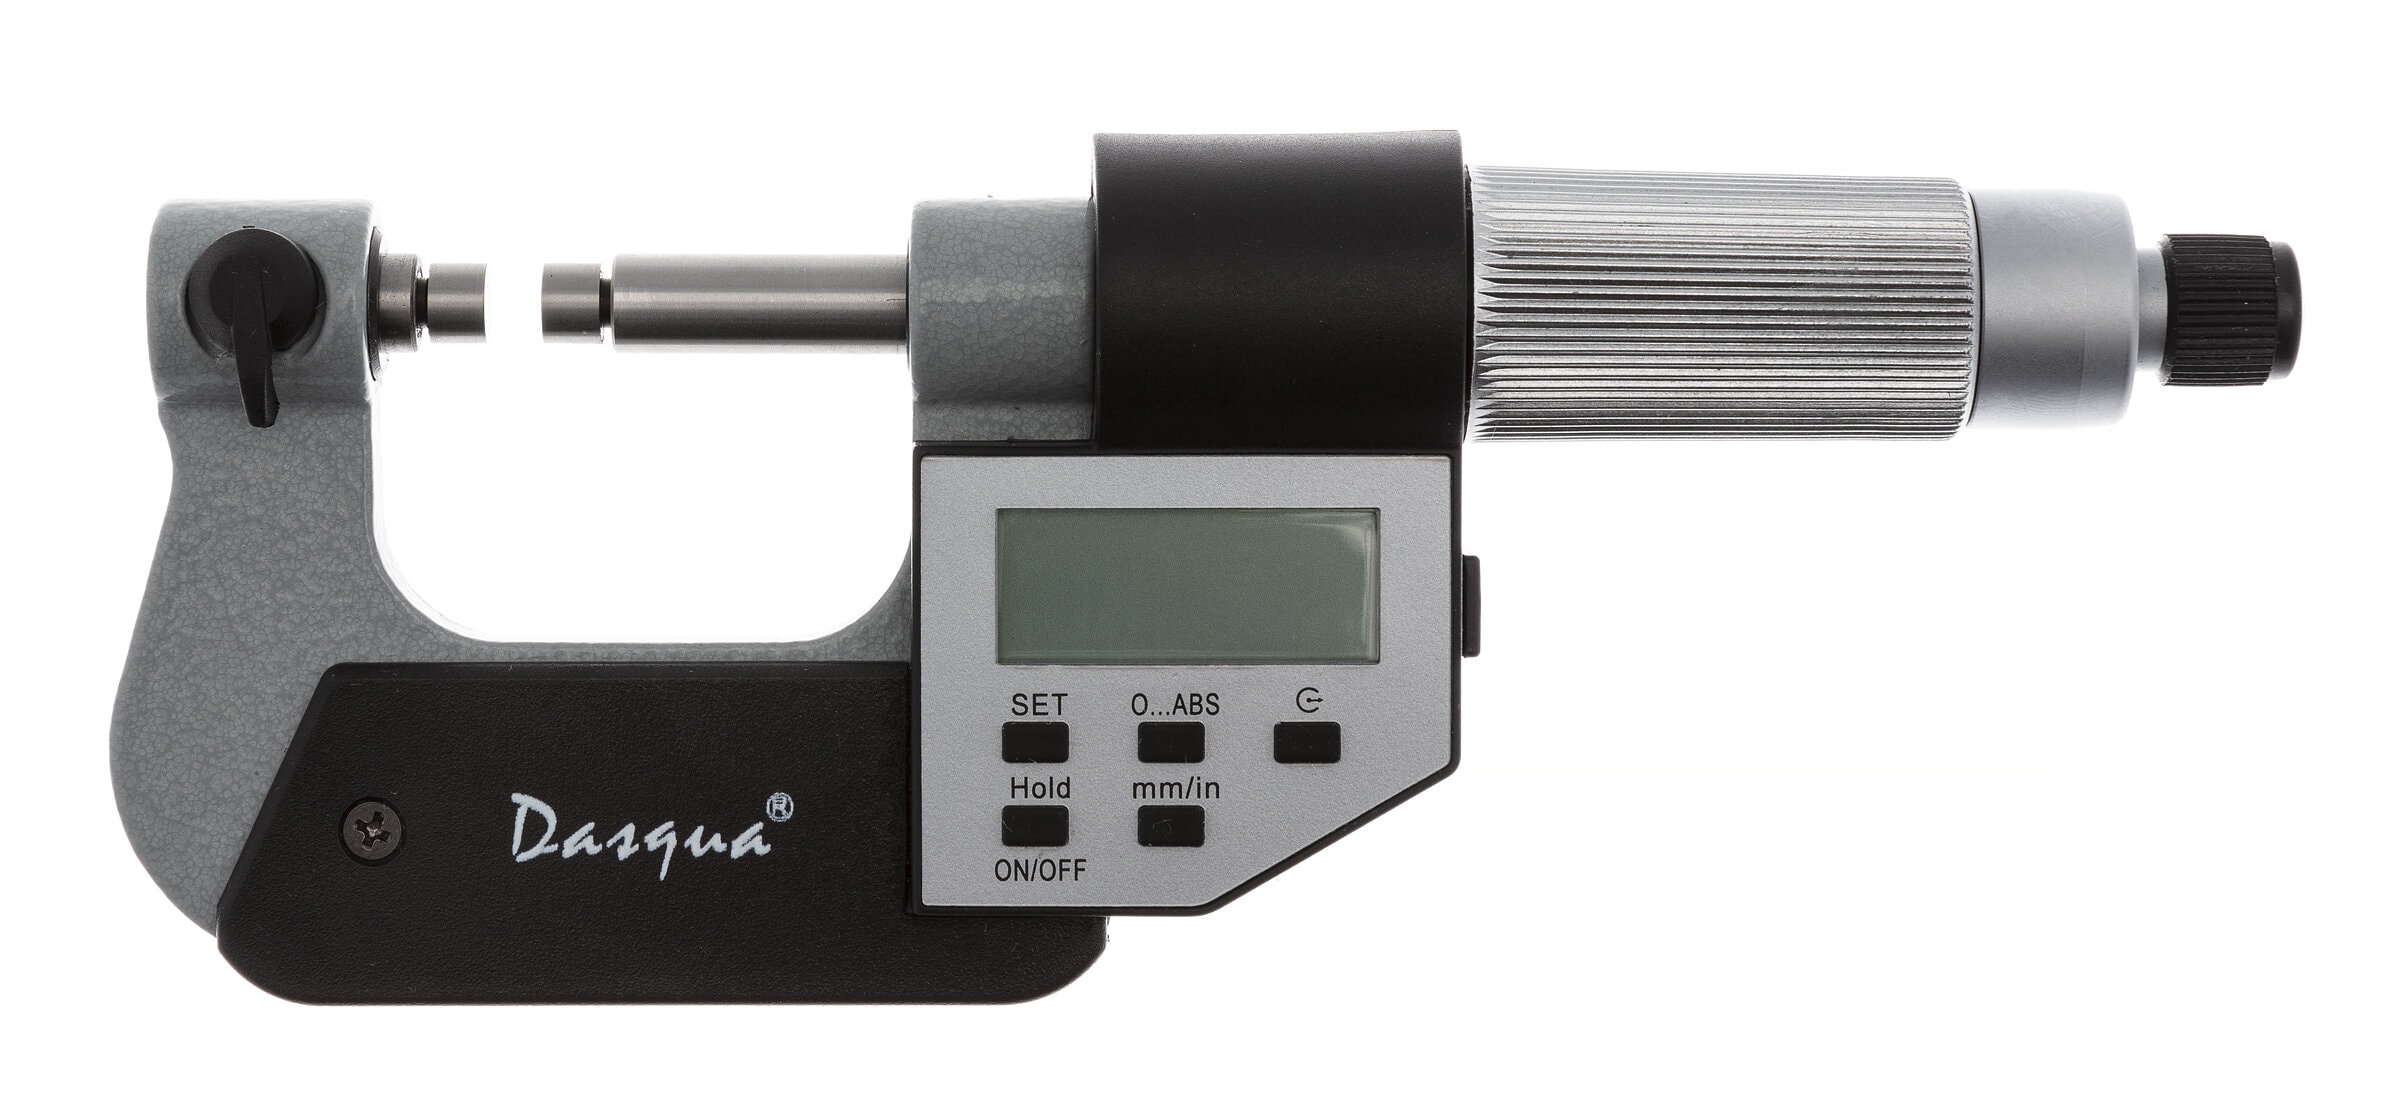 Universal mikrometer, digital